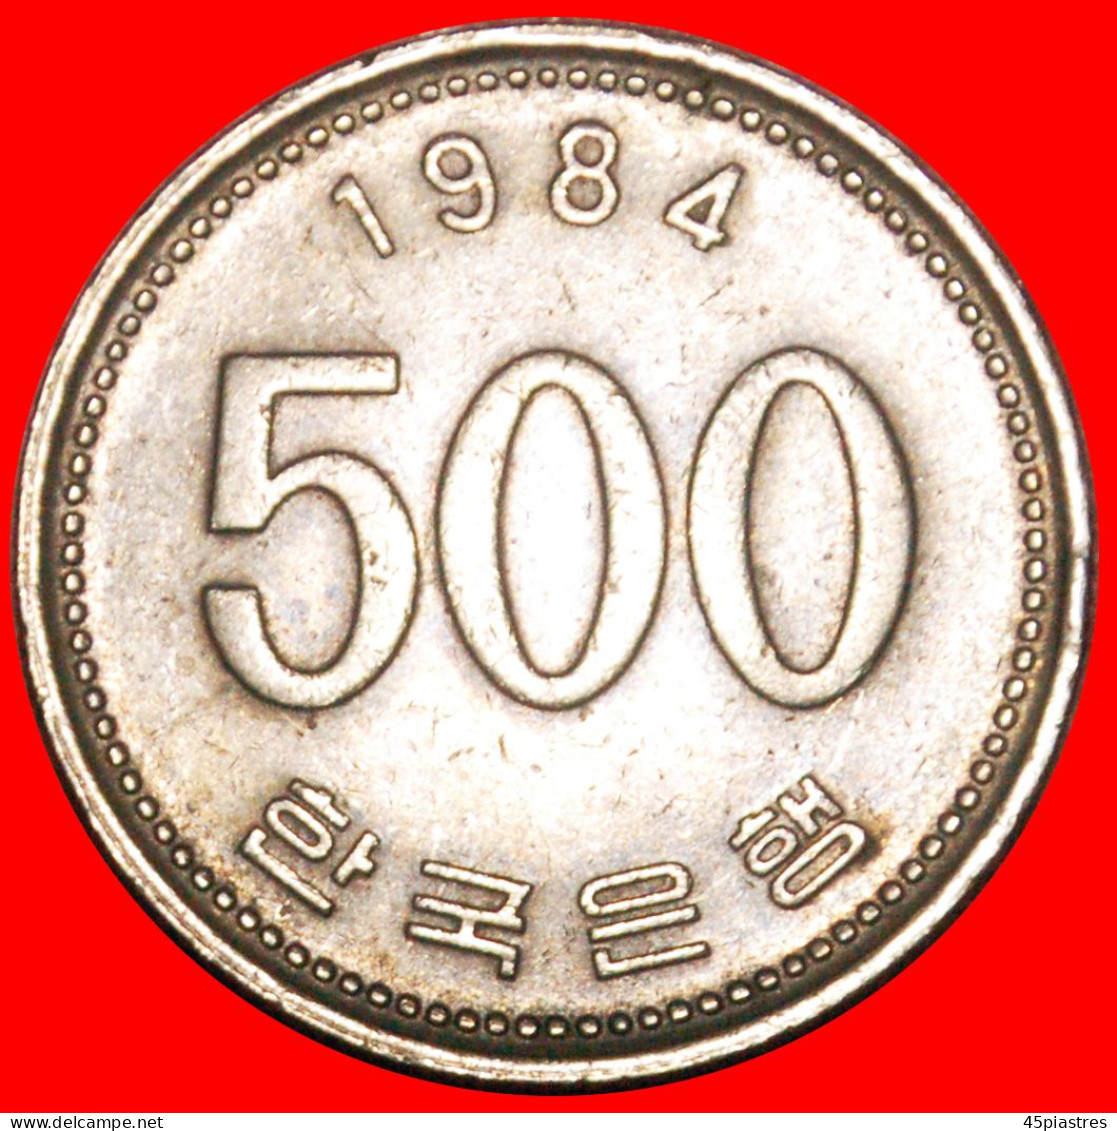 * MANCHURIAN CRANE (1982-2019): SOUTH KOREA  500 WON 1984! ·  LOW START · NO RESERVE! - Korea, South